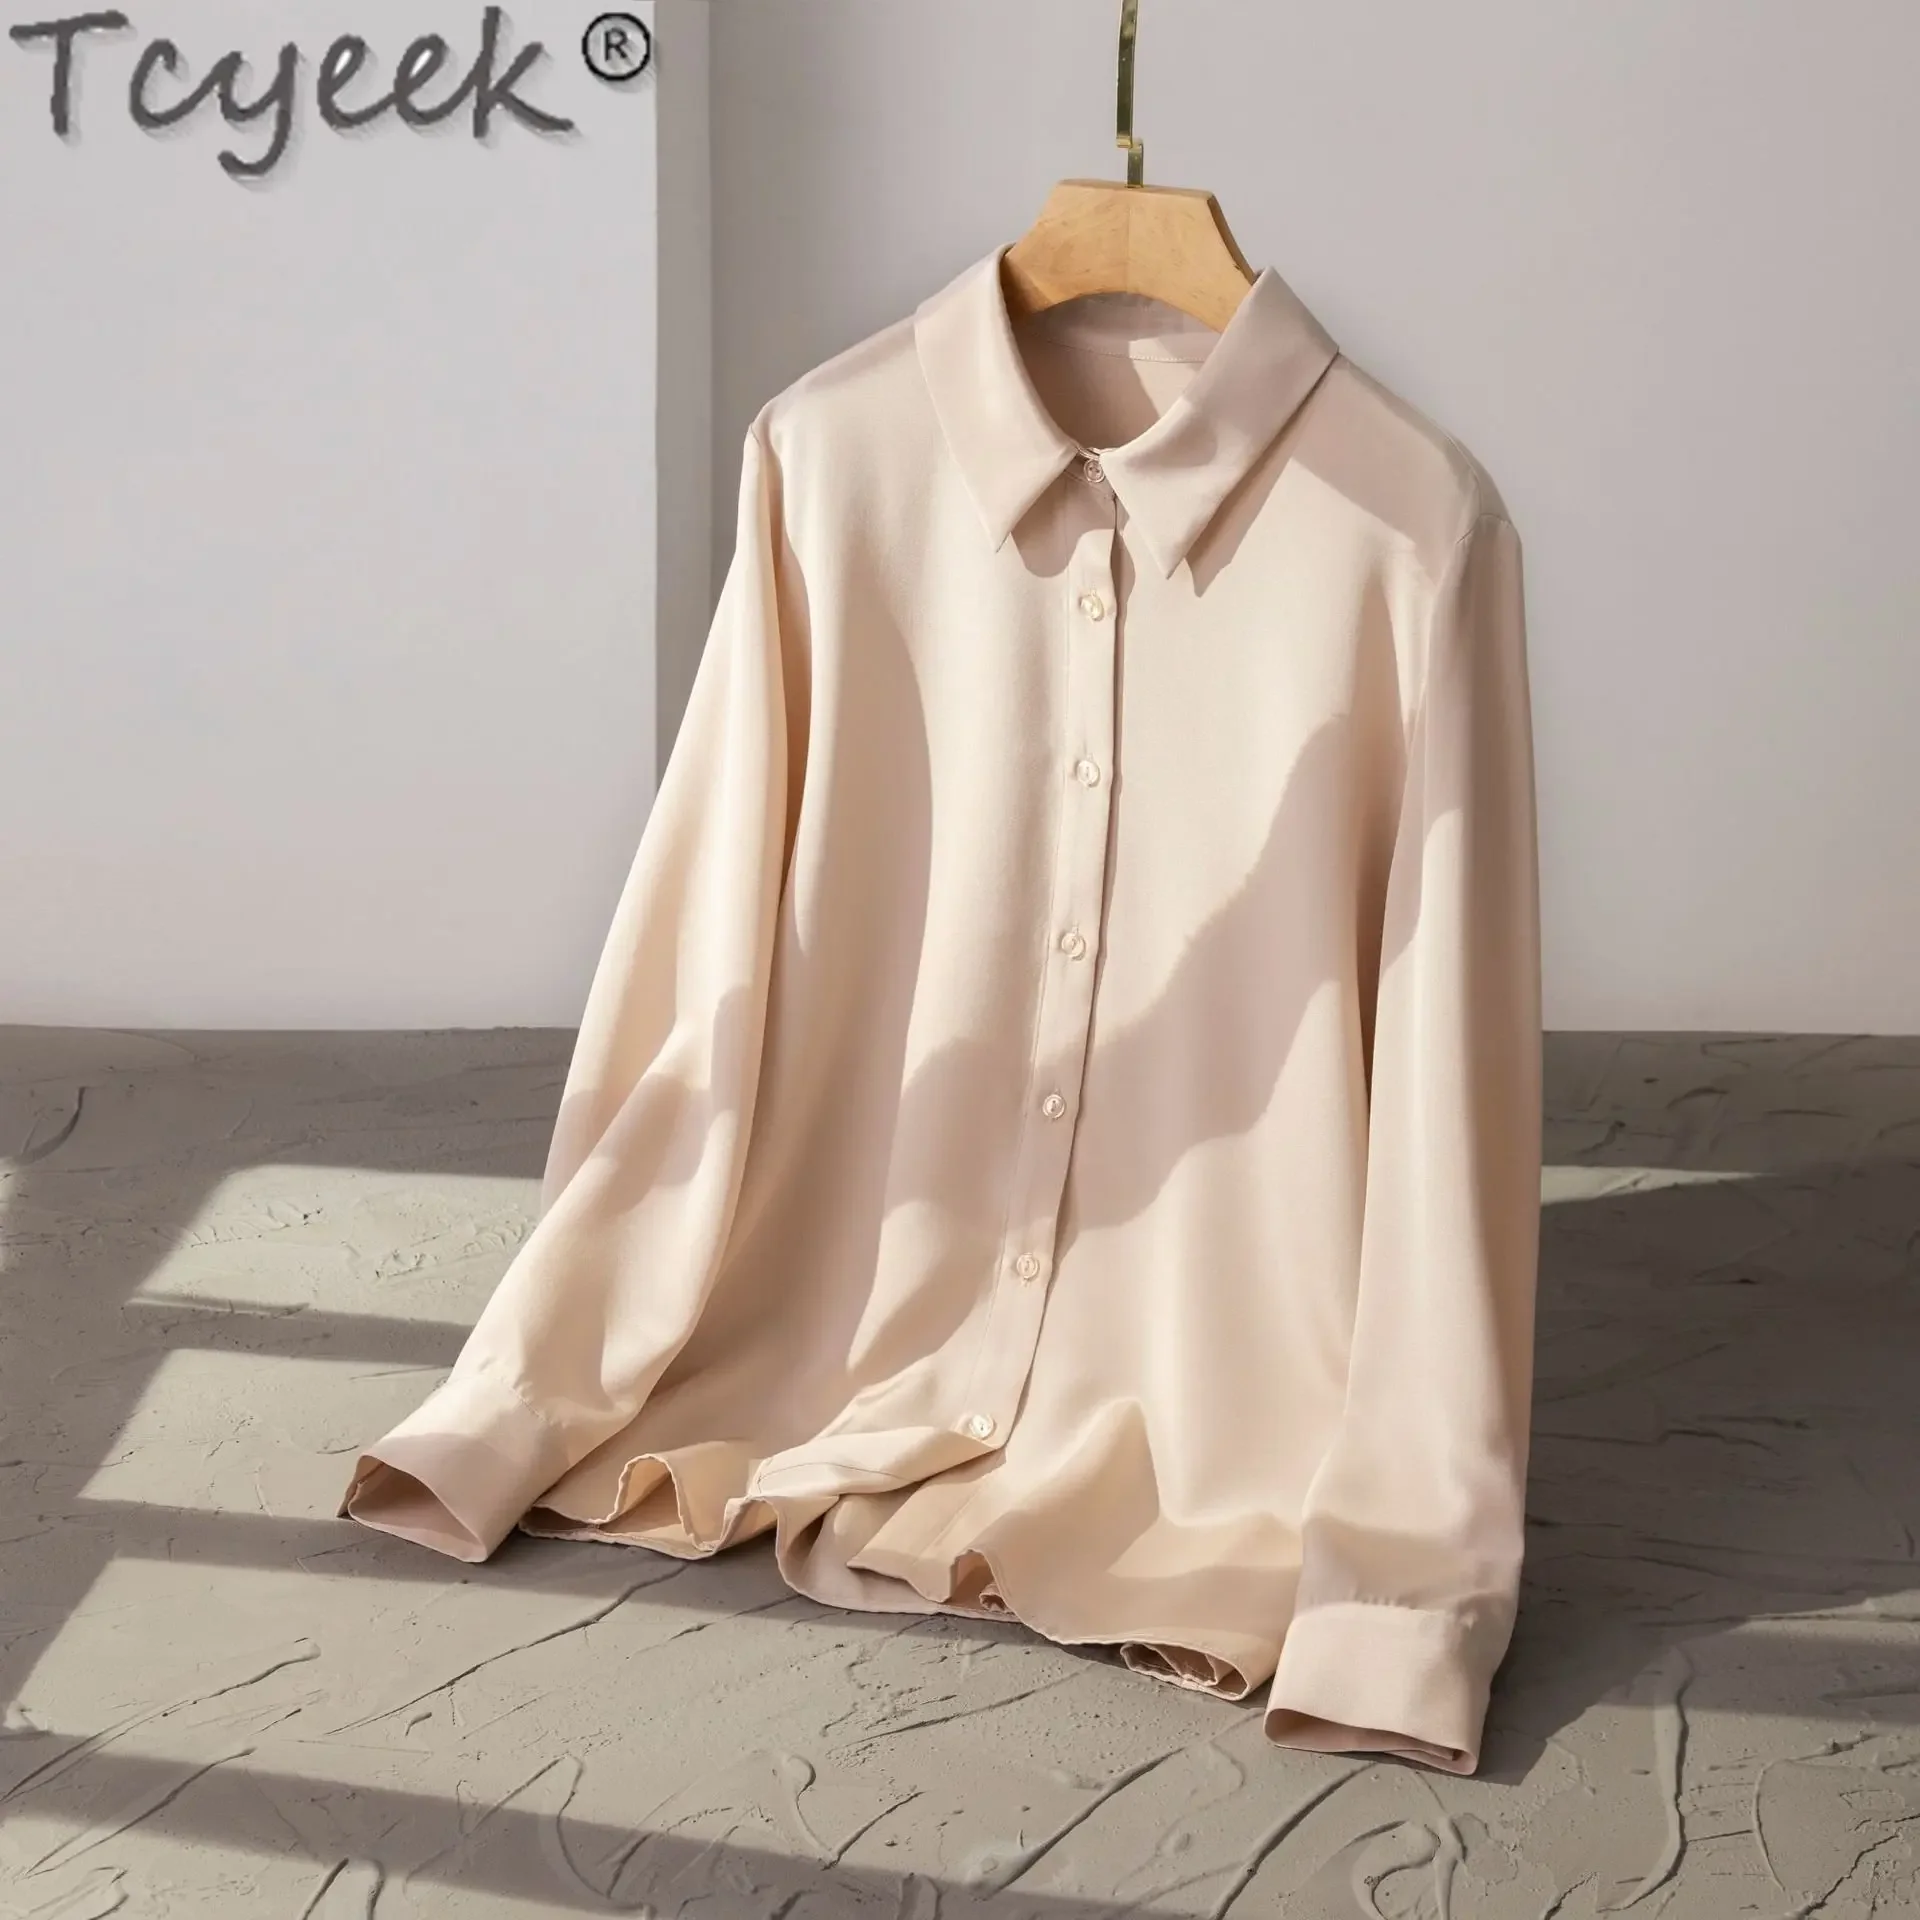 

Tcyeek Women's Elegant Blouses Spring Fall 93% Mulberry Silk Shirt Fashion Shirts for Women Clothing Office Lady Top рубашка LM